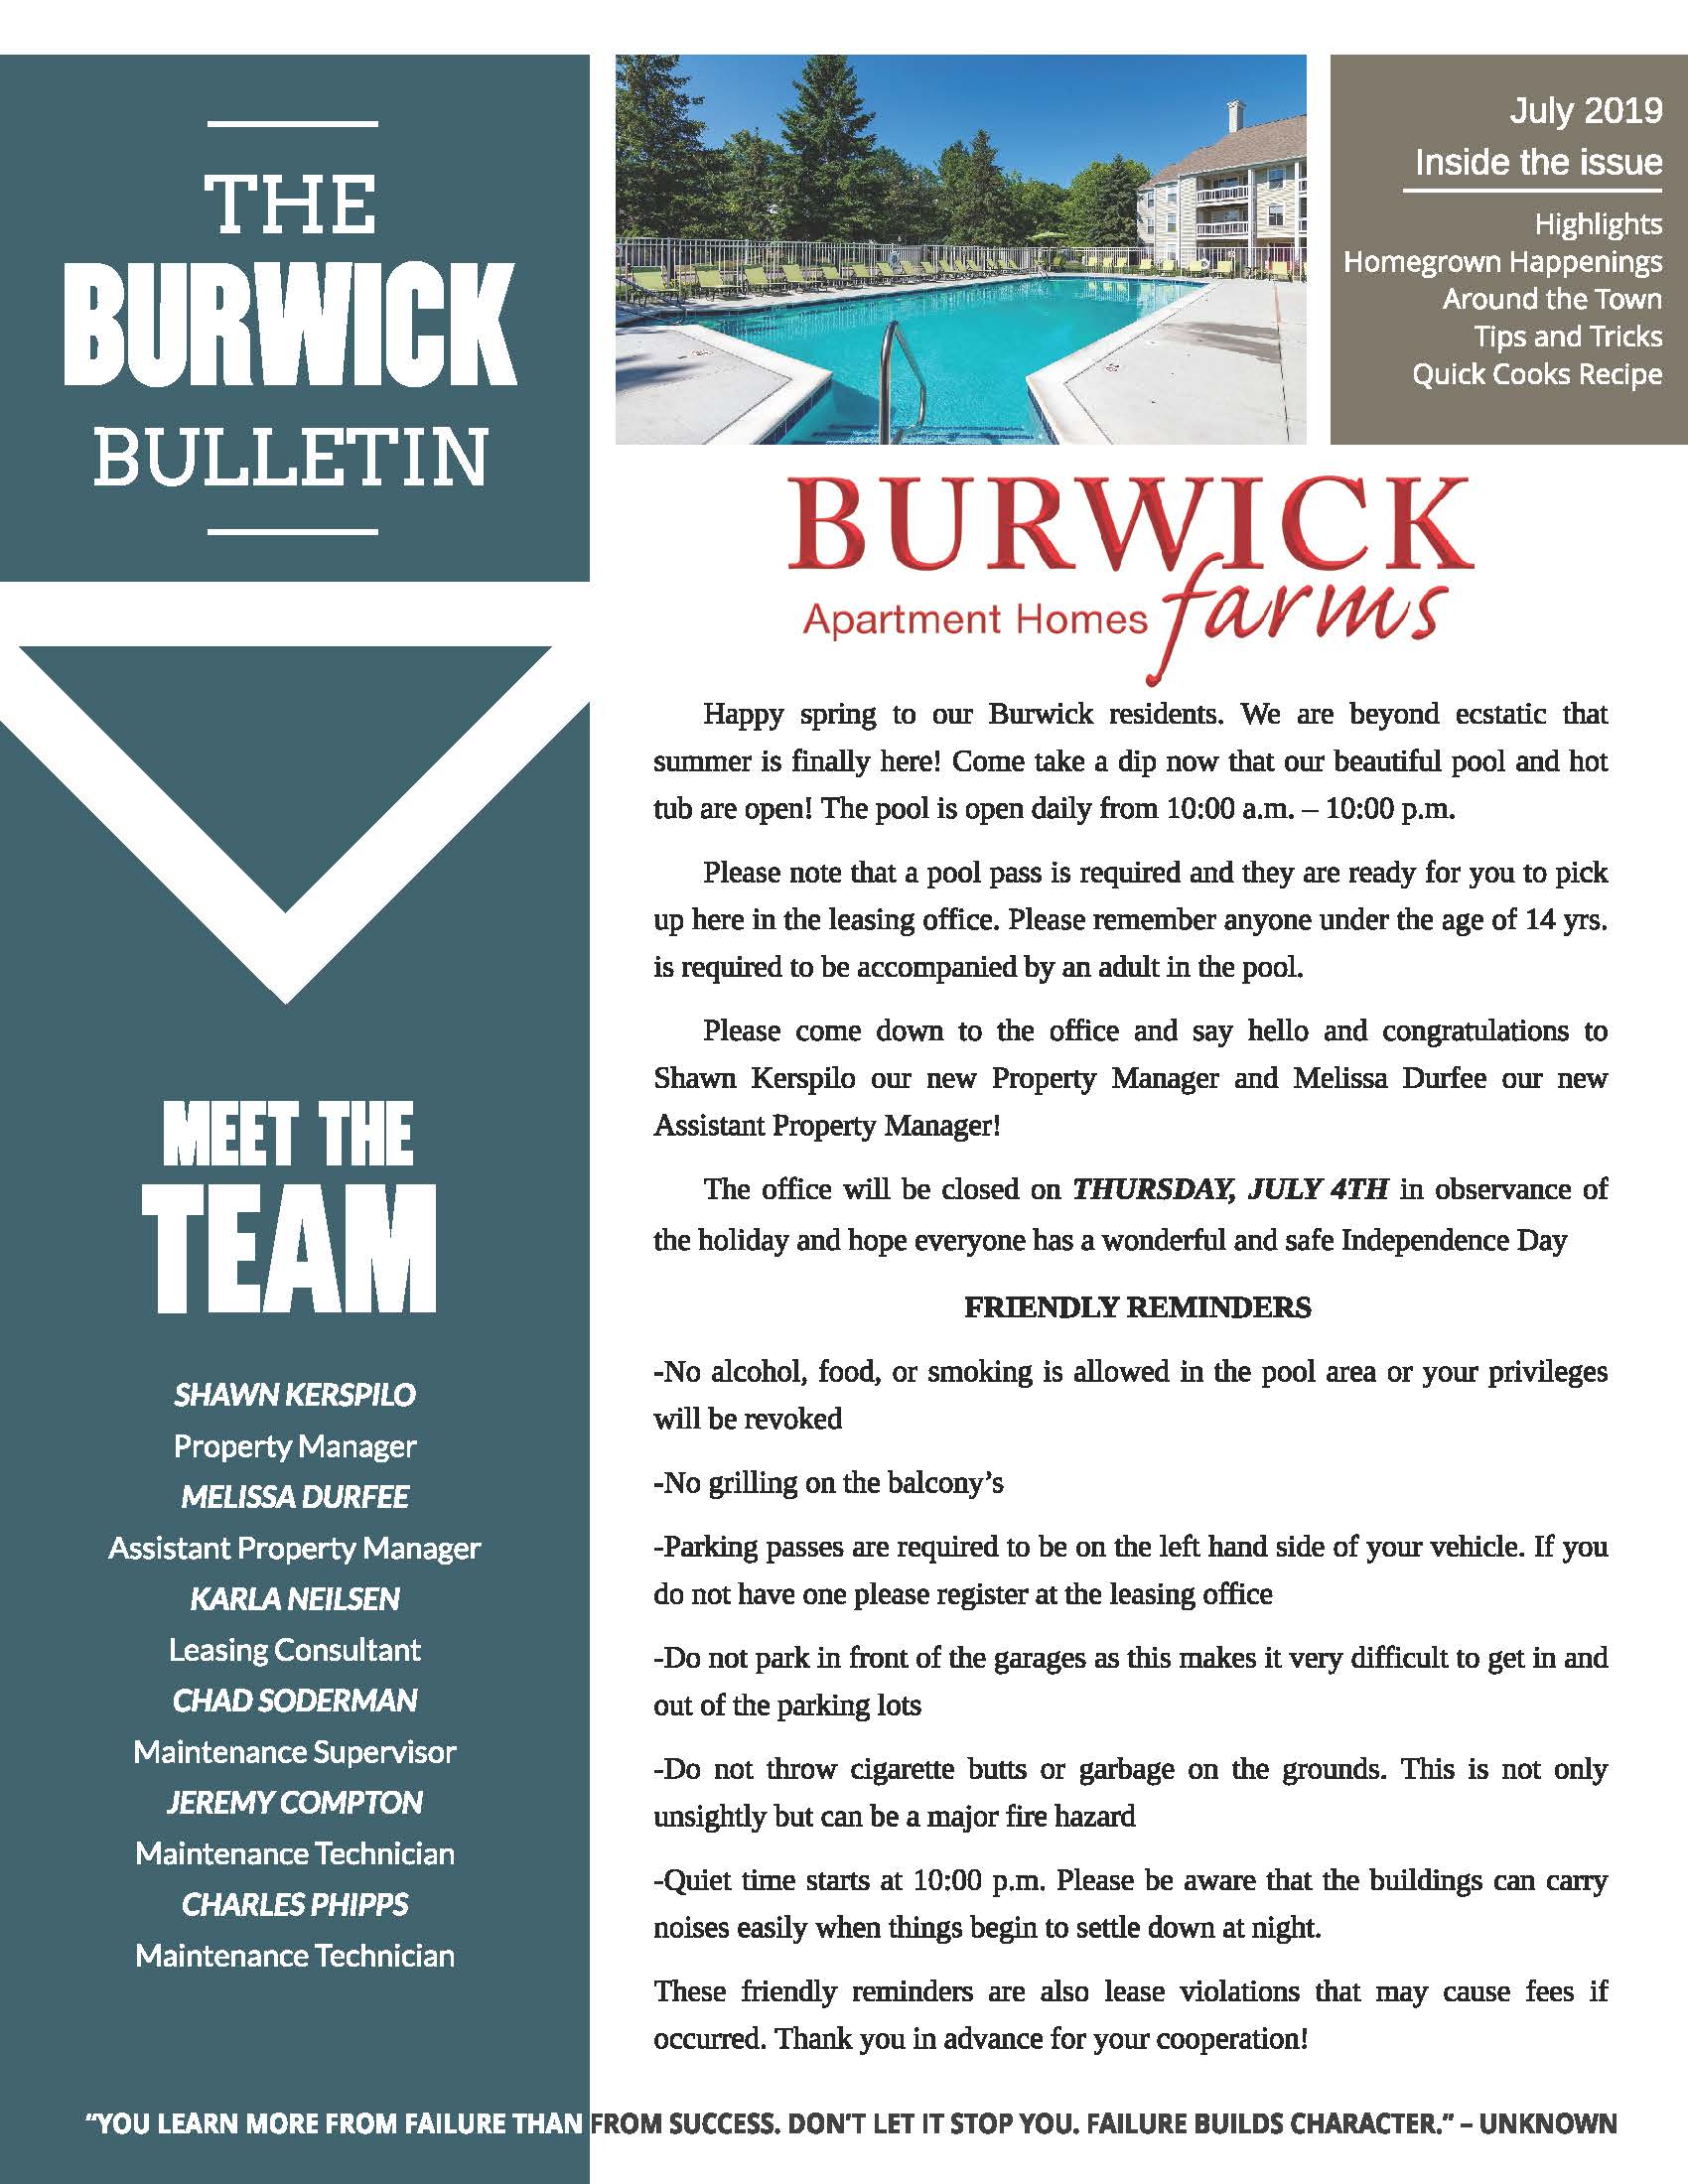 Burwick Farms Apartments In Howell Mi